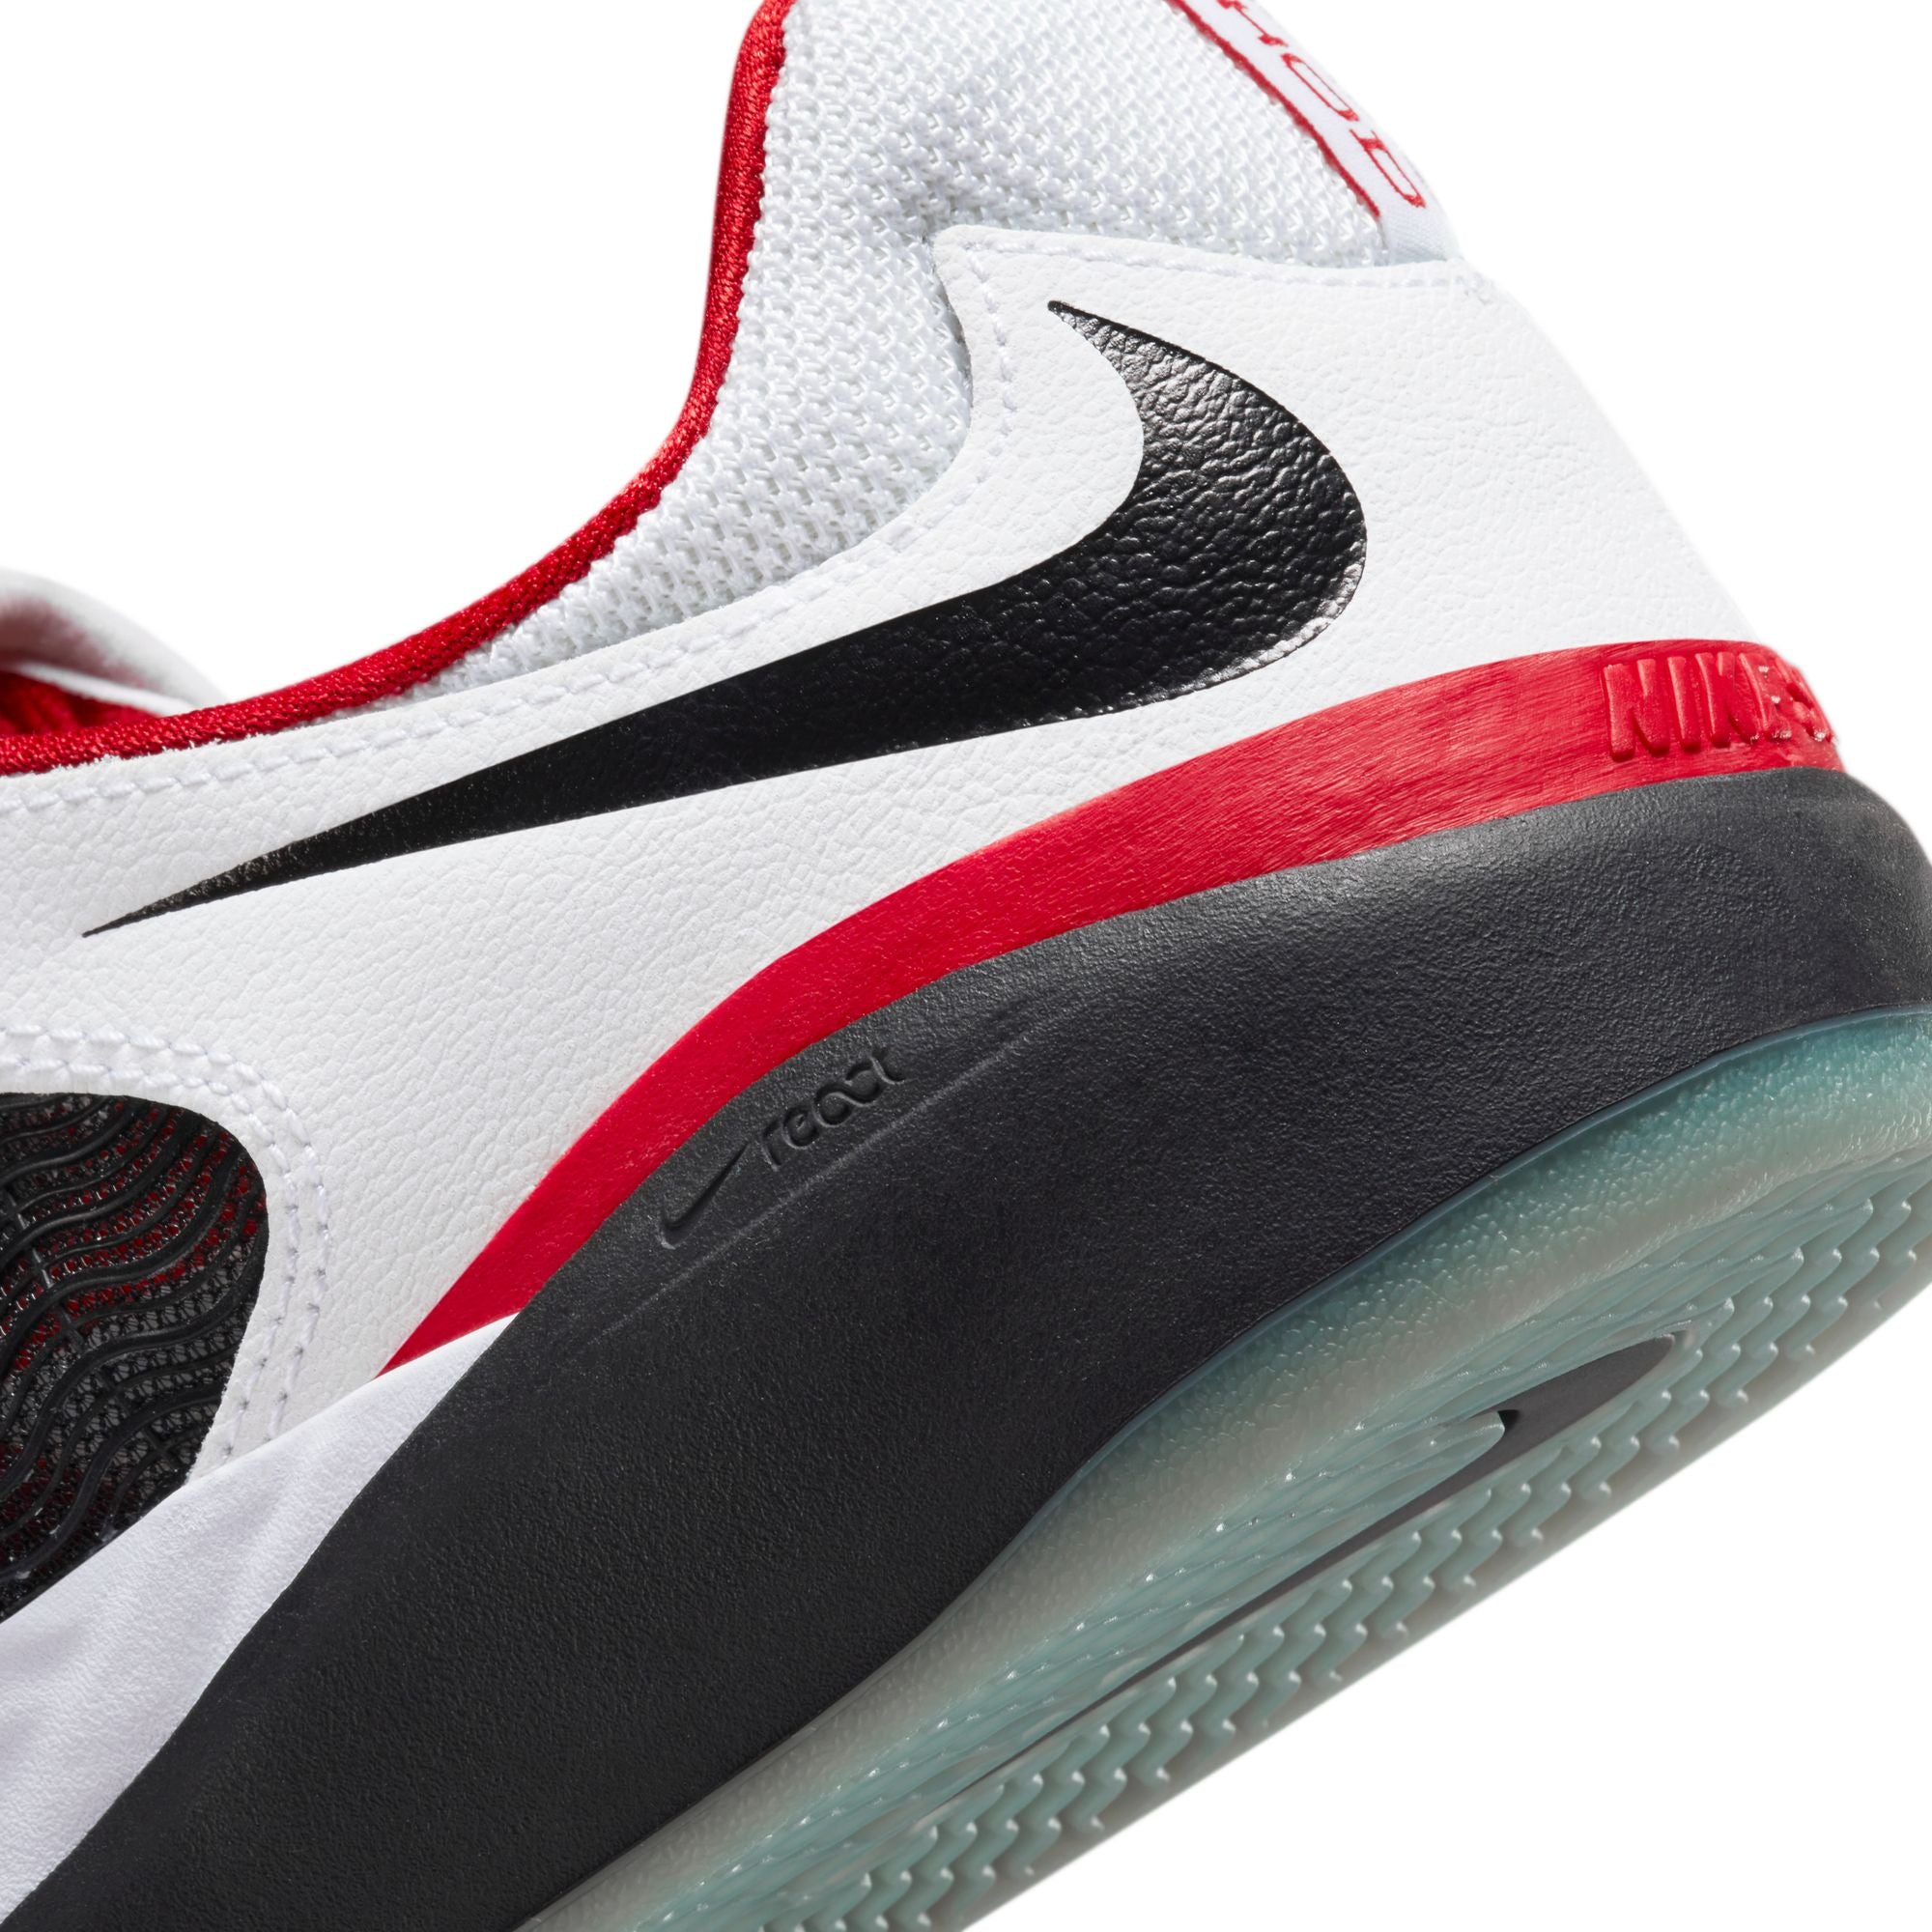 White/Black Premium Ishod Nike SB Skate Shoe Detail